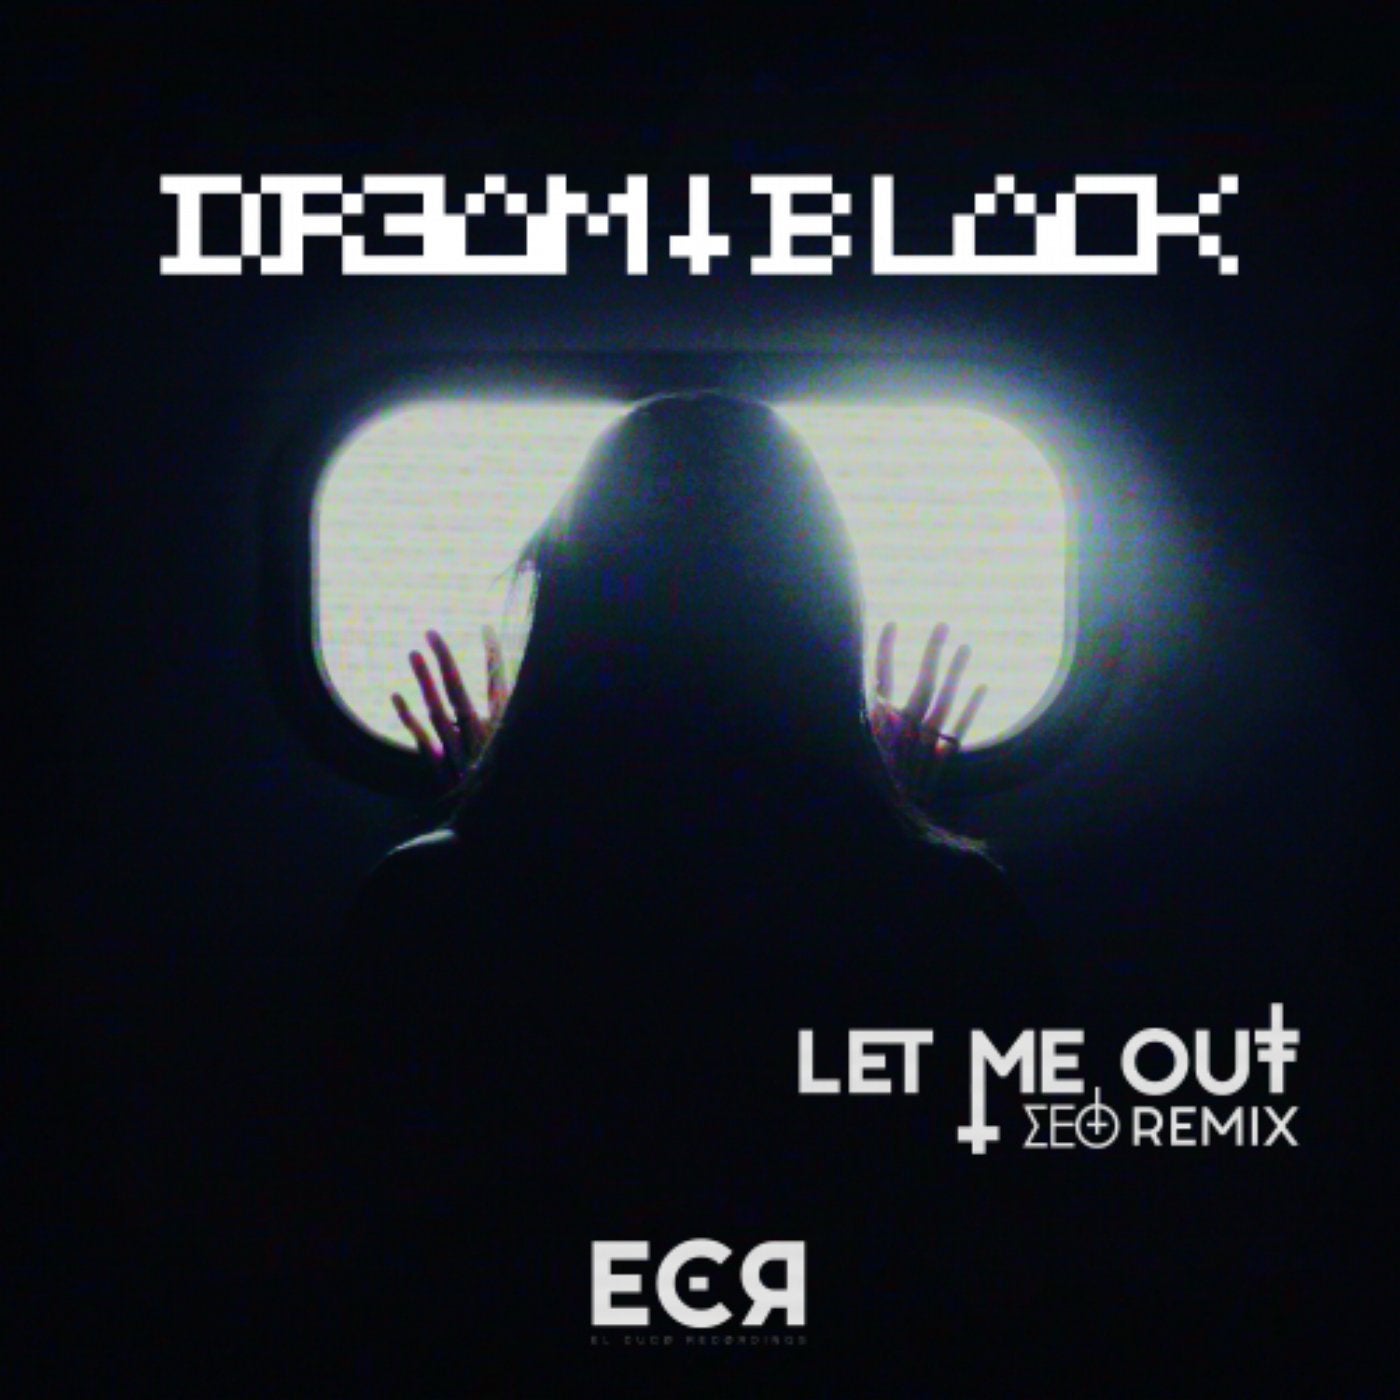 Let Me Out (ΣΕΘ Remix)